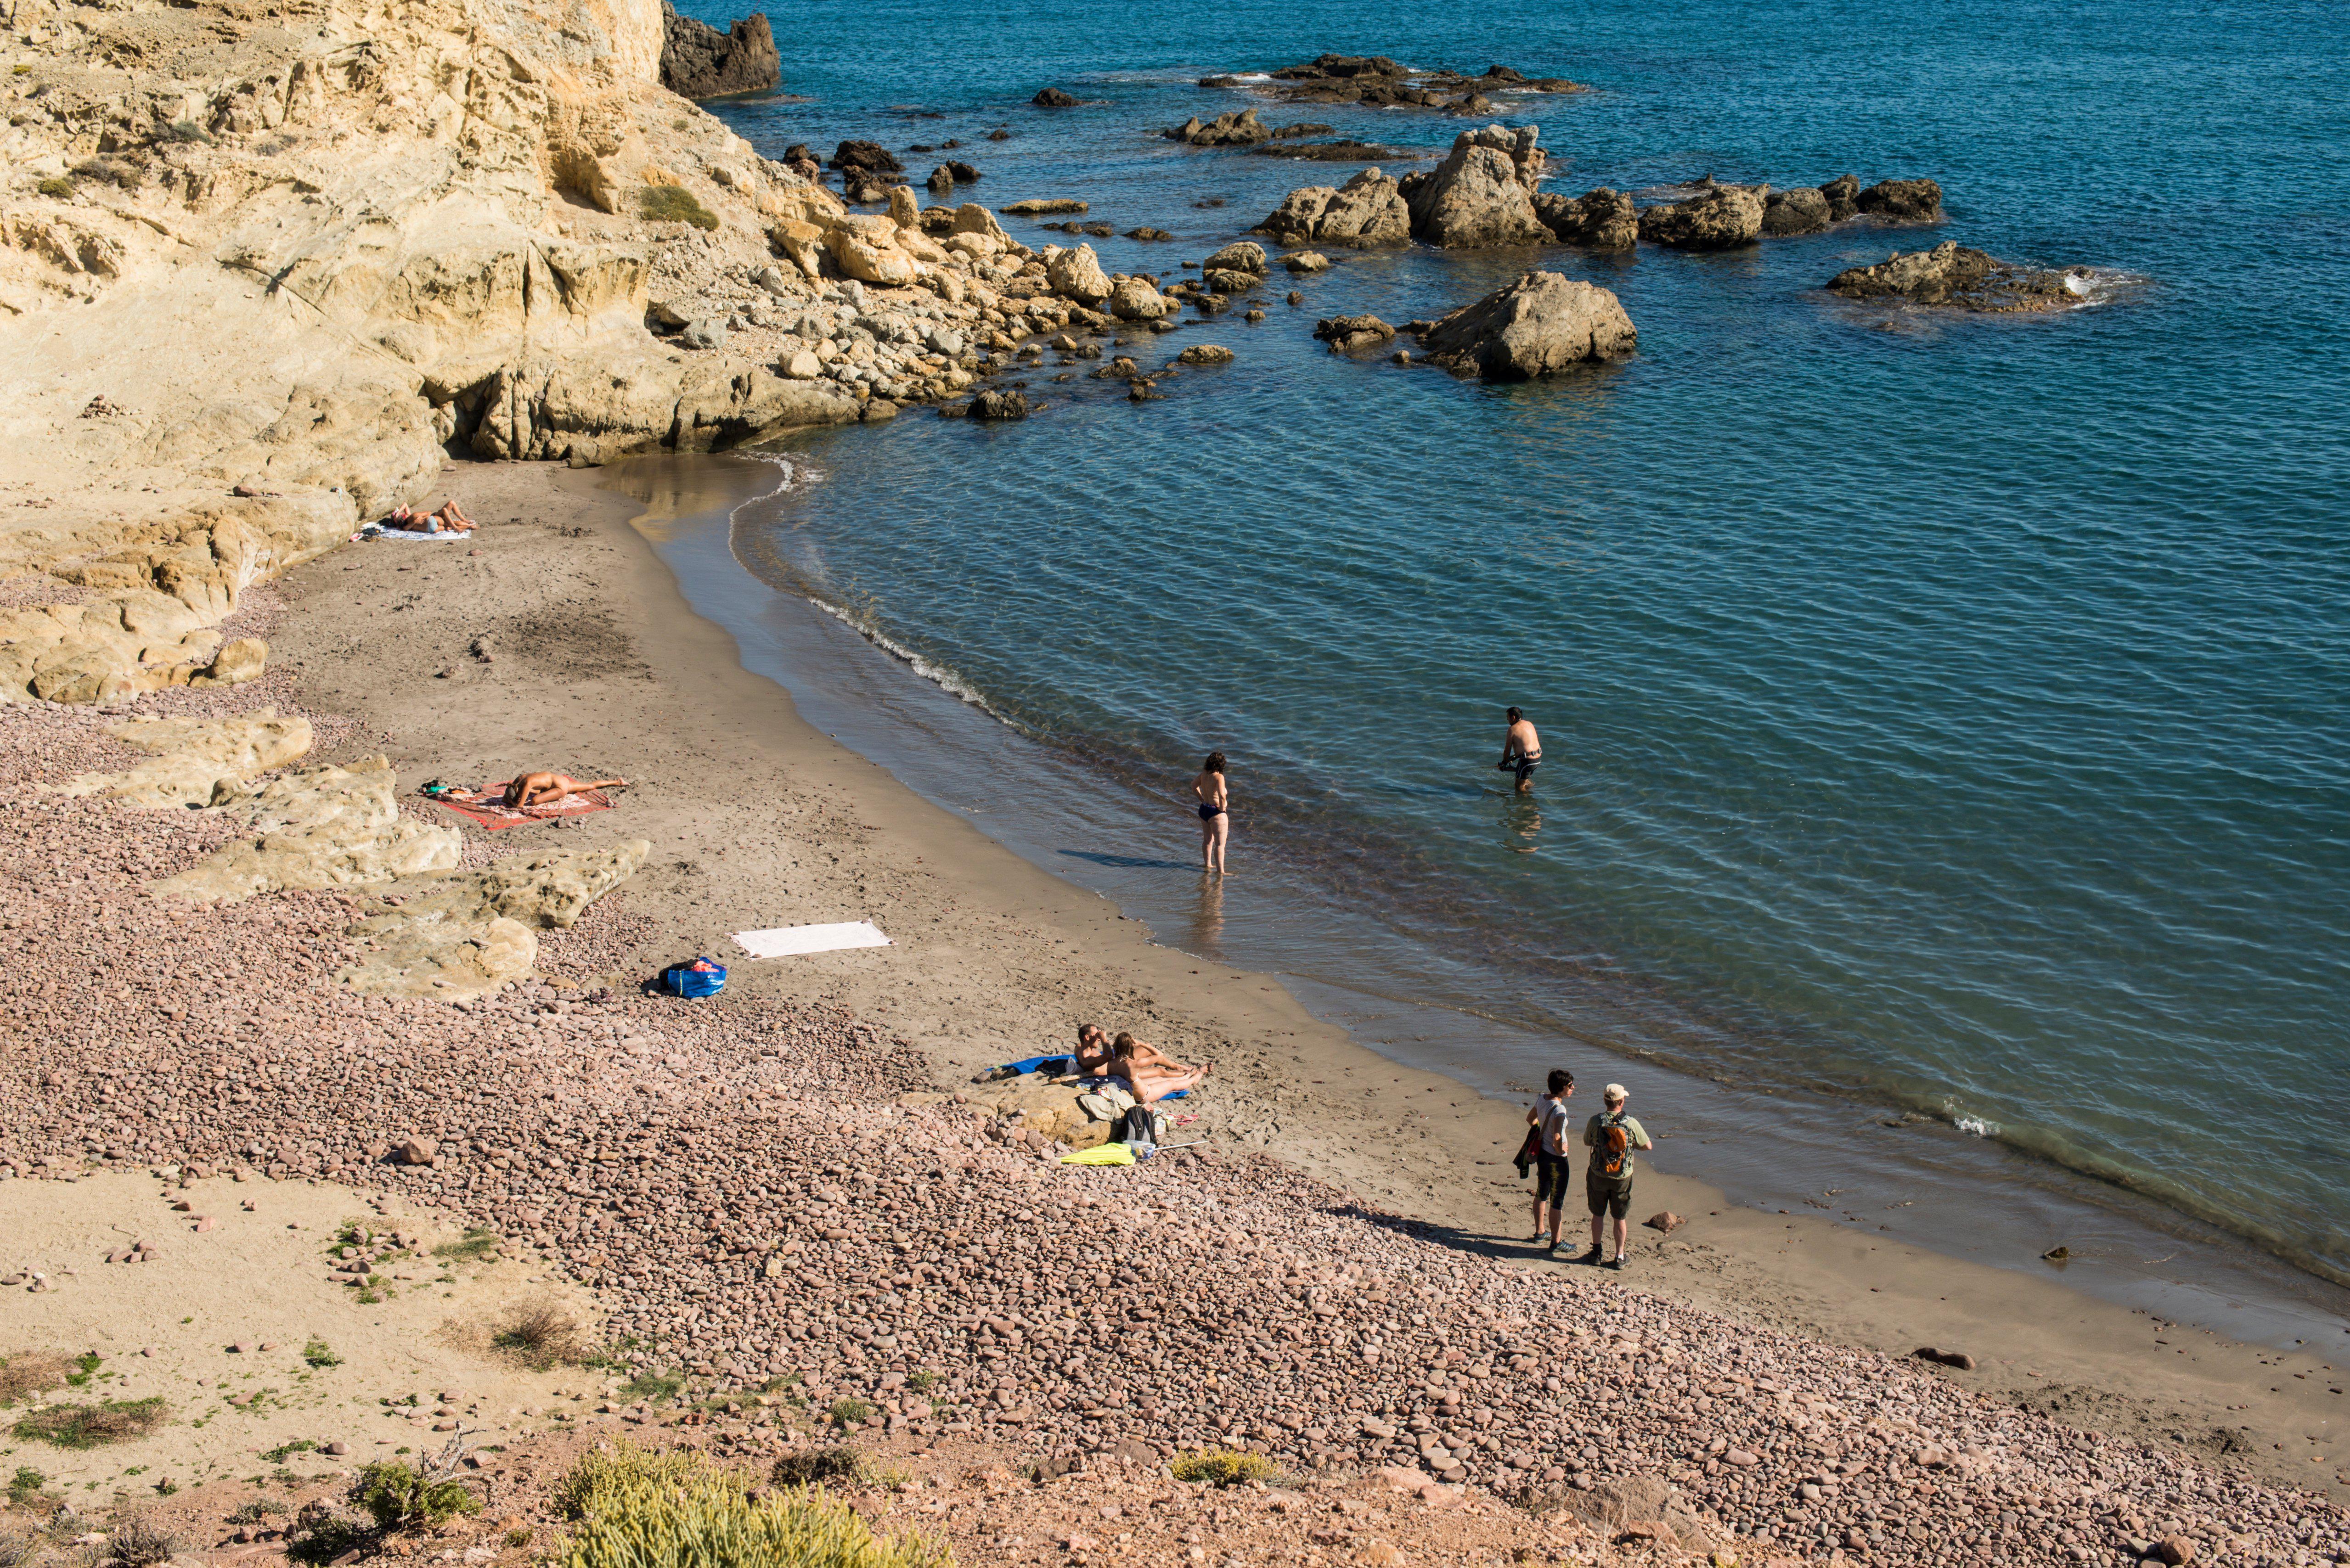 belinda glenn recommends Topless Beaches In Spain